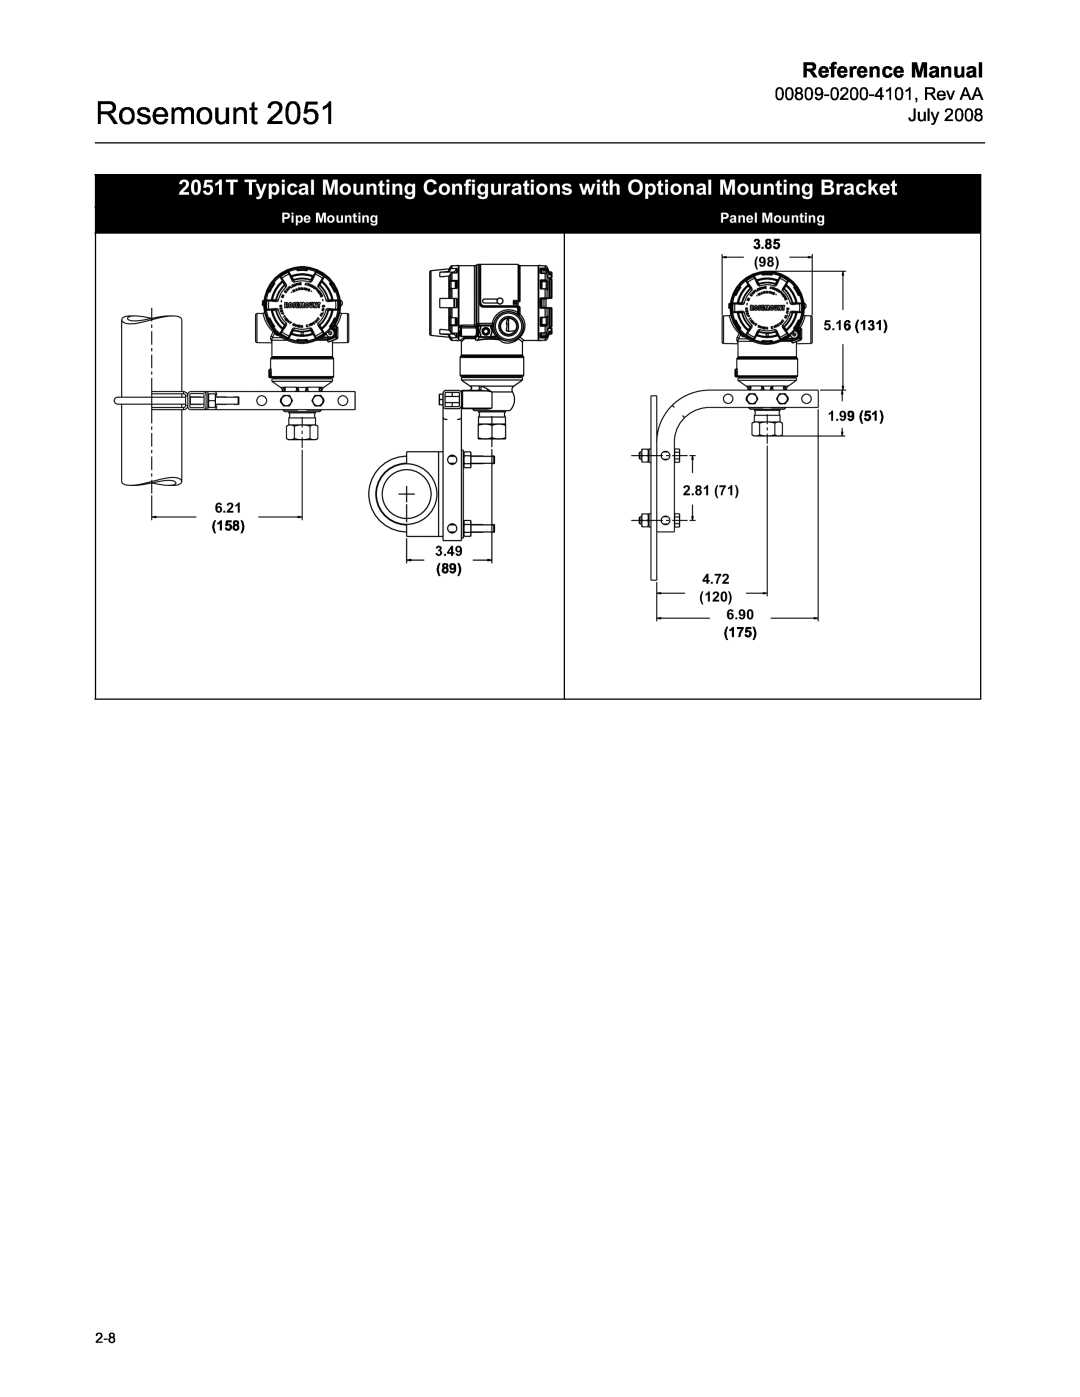 Emerson Process Management 2051 manual Rosemount, Reference Manual, Pipe Mounting, Panel Mounting 